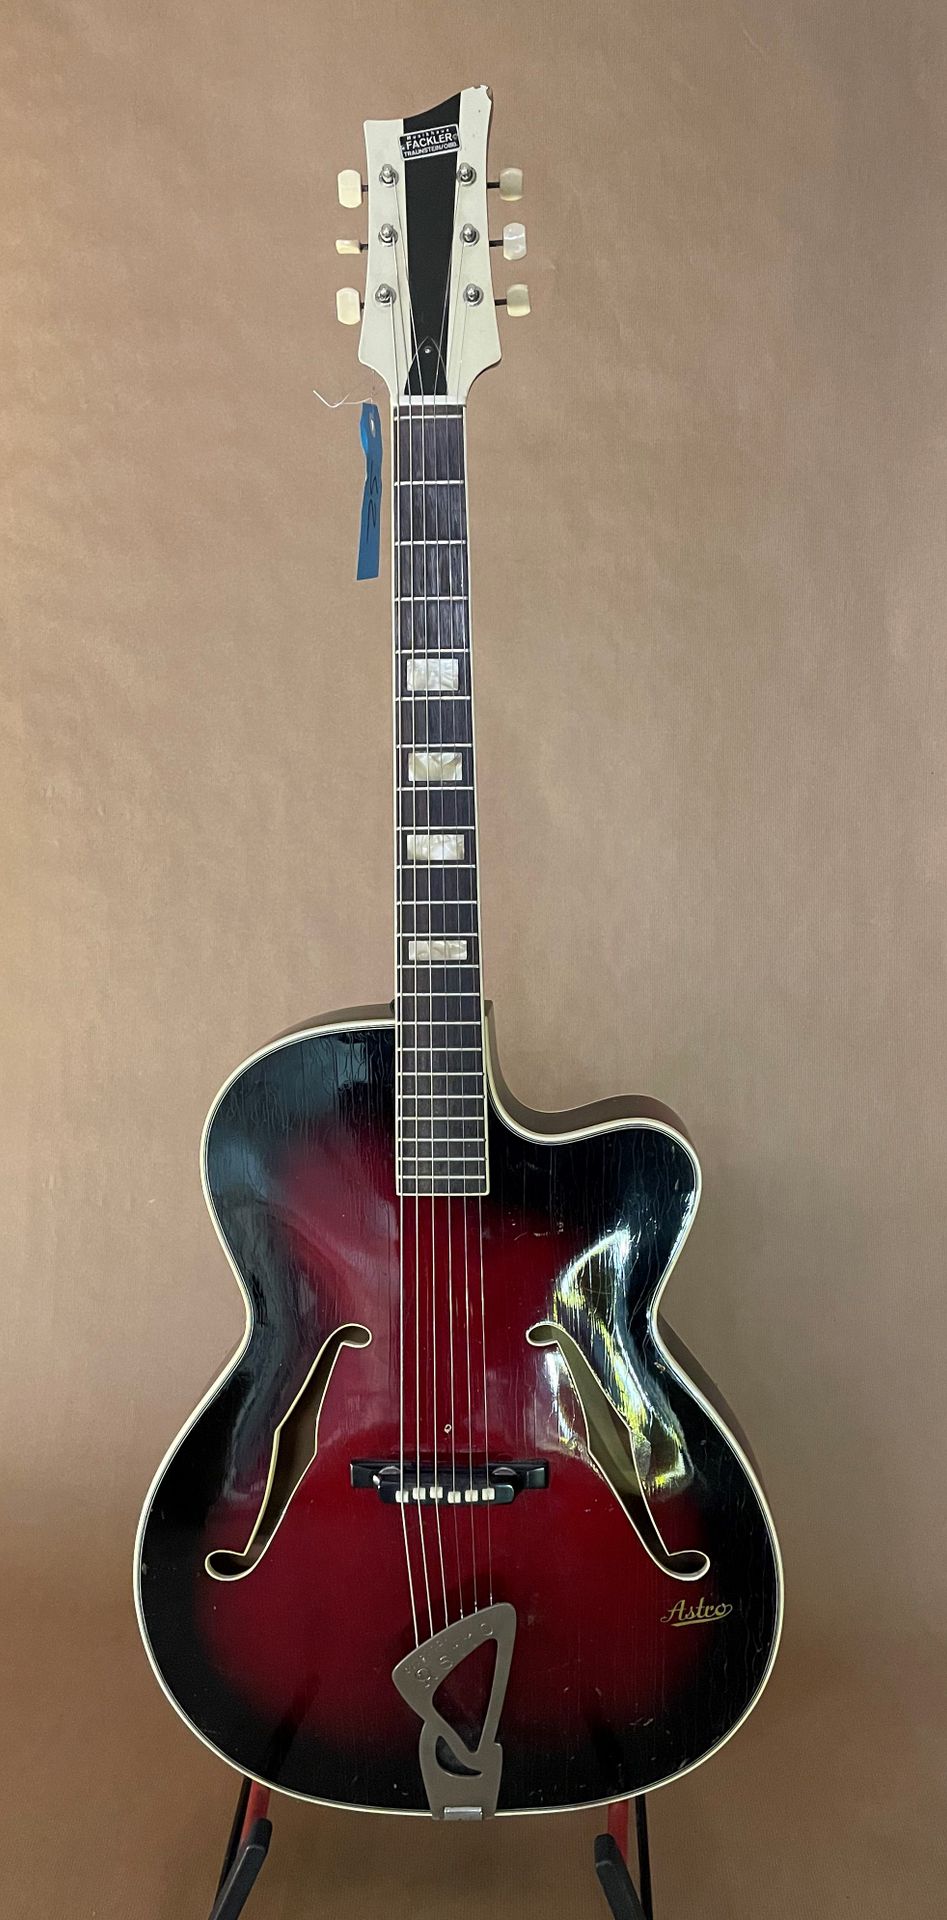 Null Guitare Jazz archtop de marque ASTRO fabrication allemande c.1960

Finition&hellip;